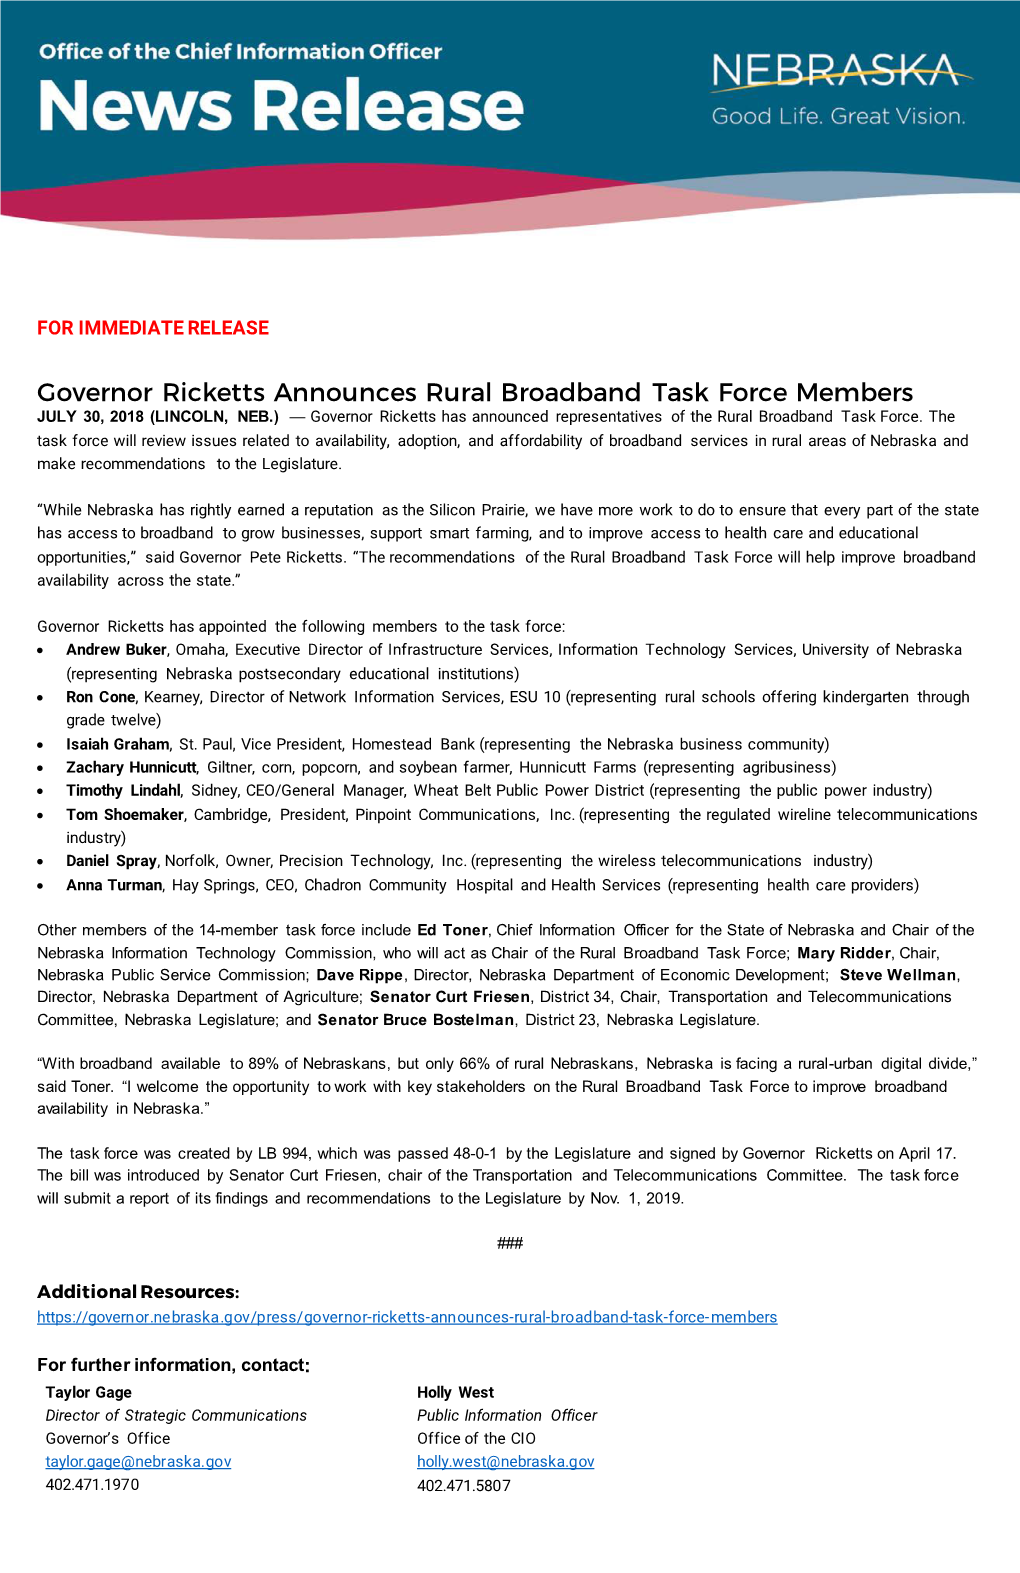 Governor Ricketts Announces Rural Broadband Task Force Members (Pdf)